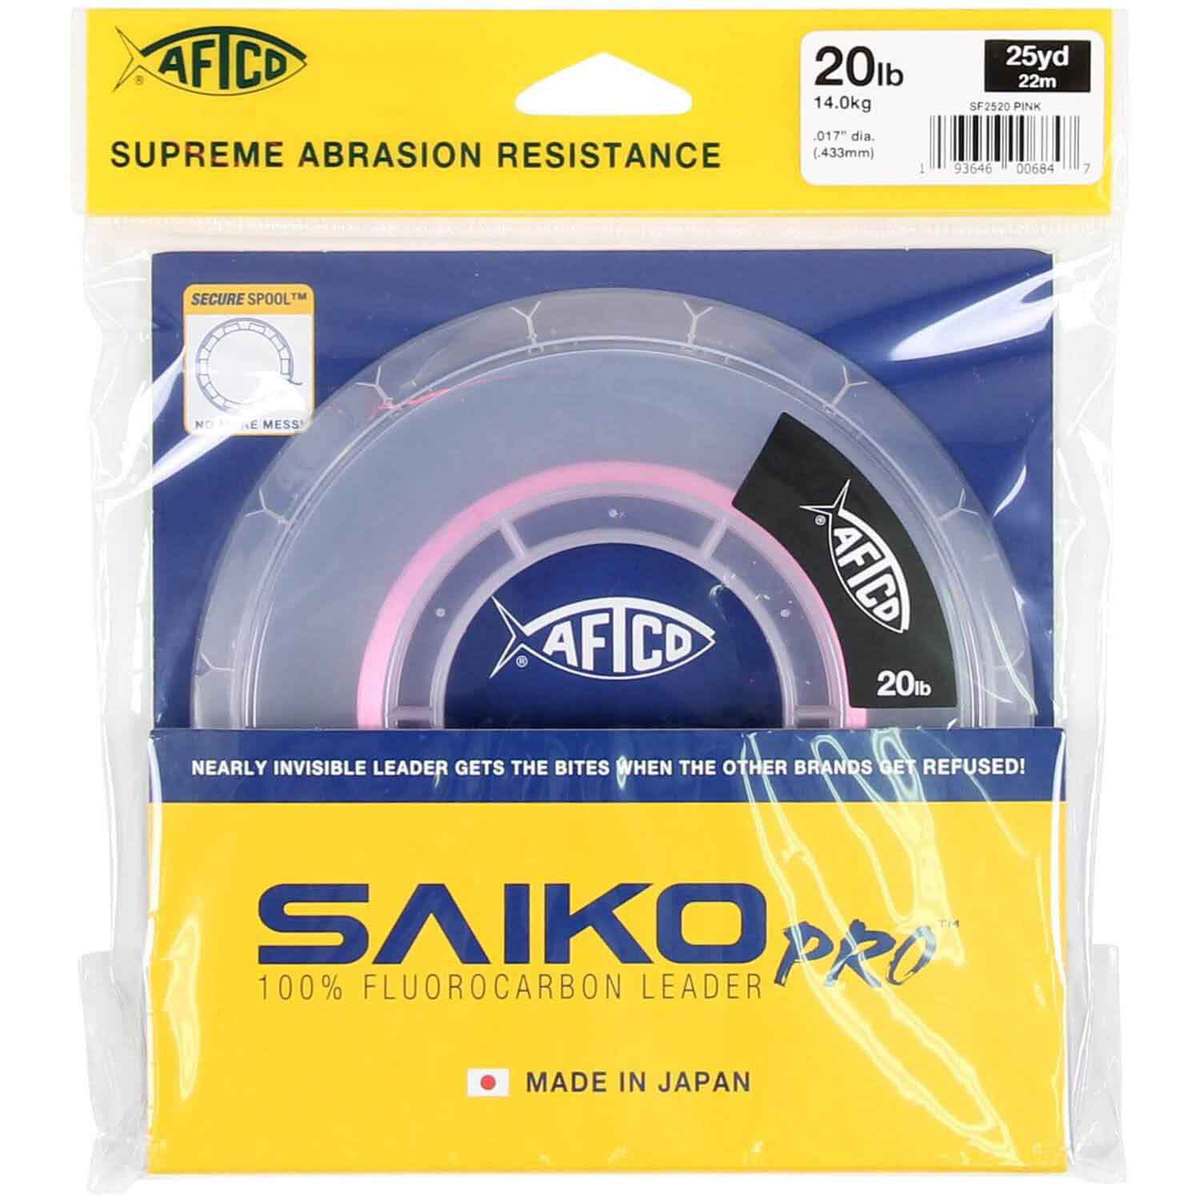 AFTCO- Saiko Pro 100% Fluorocarbon Leader